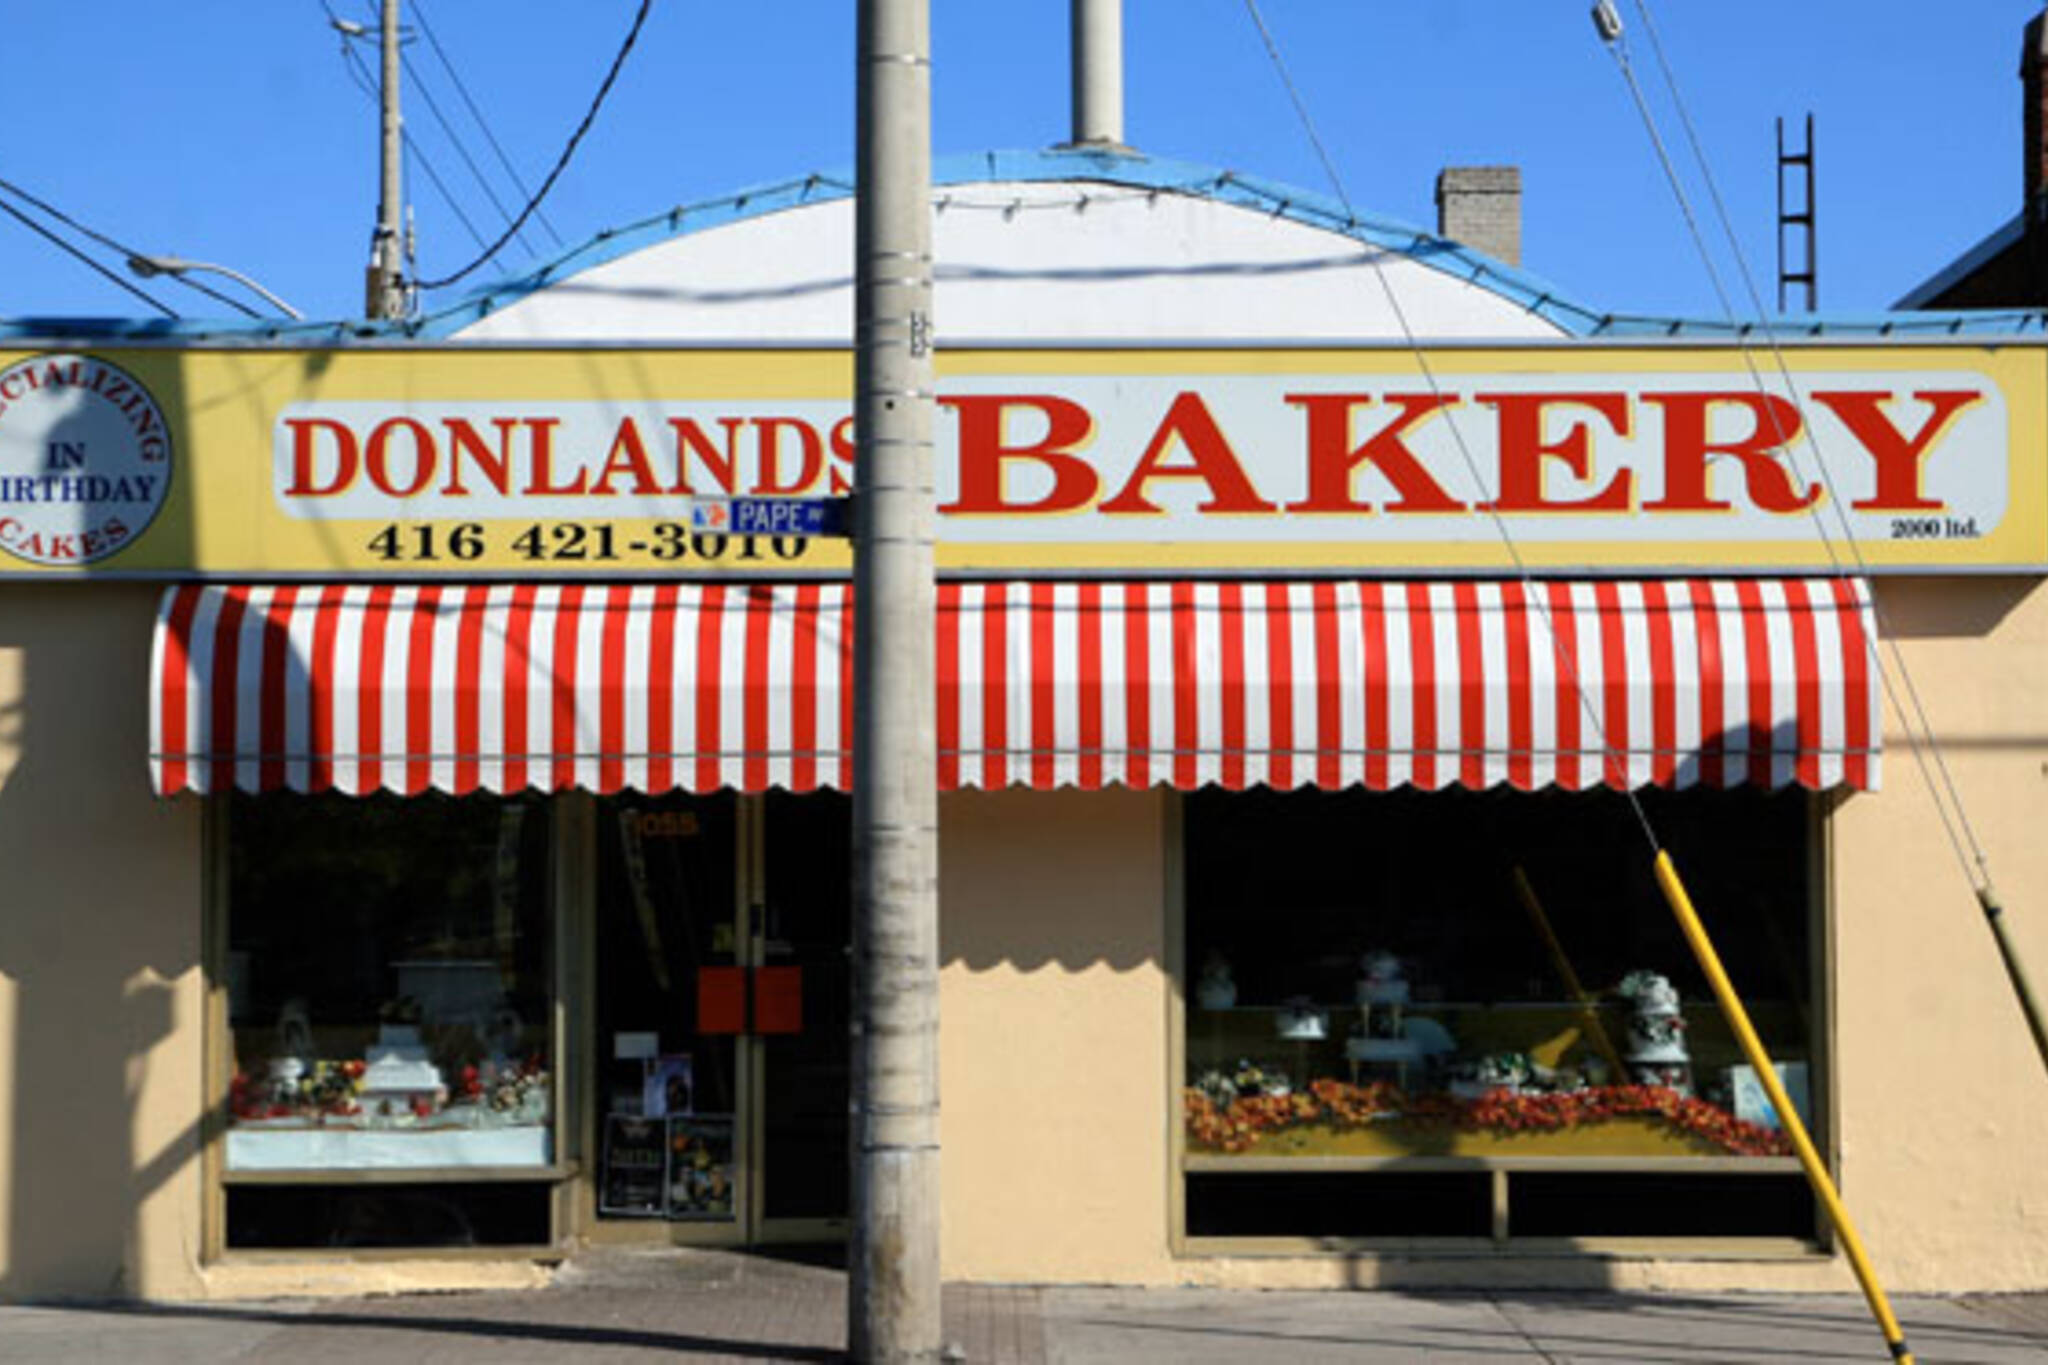 Donlands Bakery